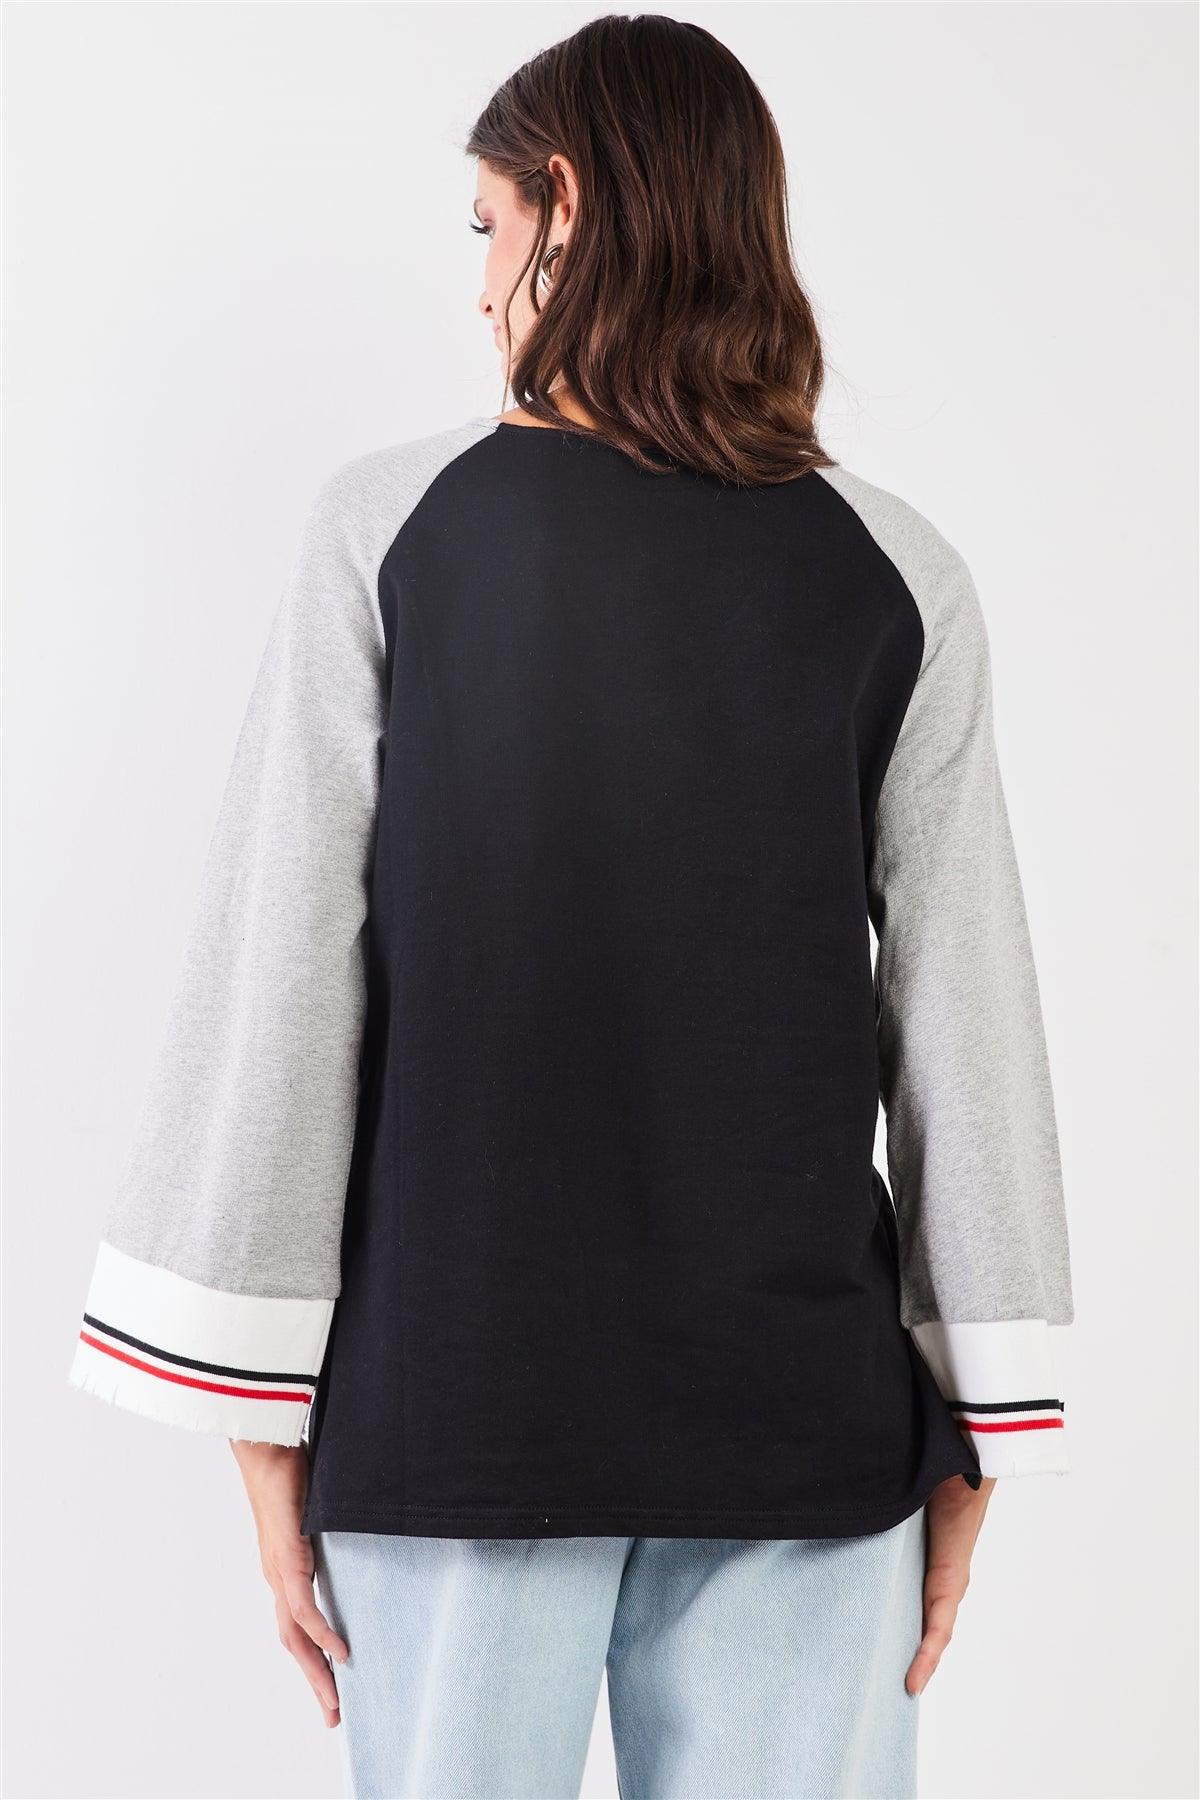 Black & Heather Grey Lace-Up V-Neck Long Bell Sleeve Asymmetrical Sweatshirt /2-2-2